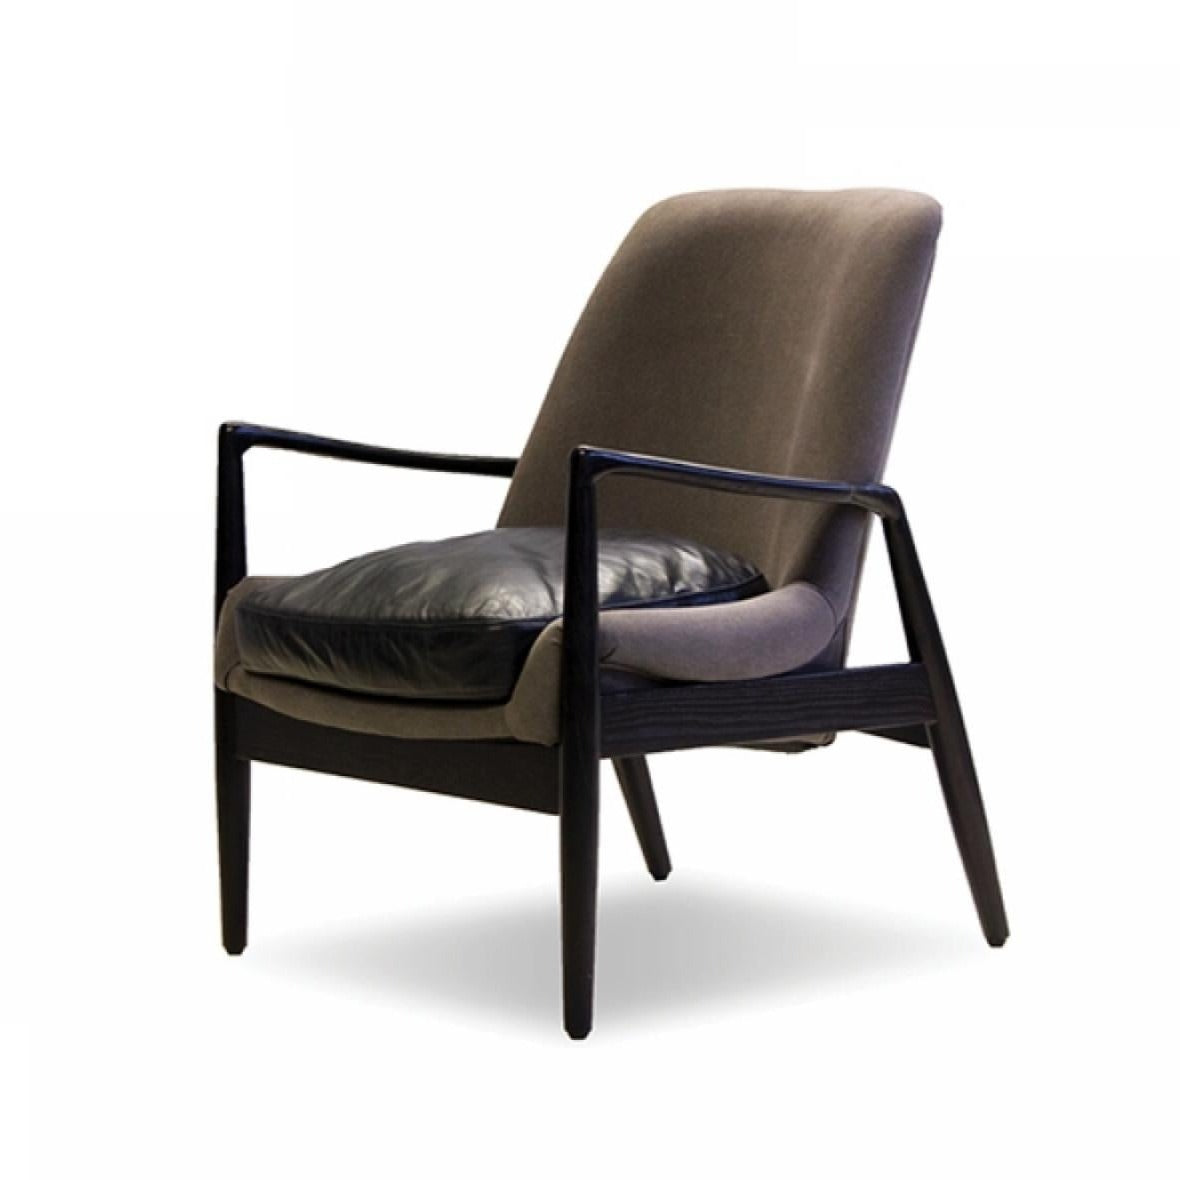 Reynolds Grey Accent Chair